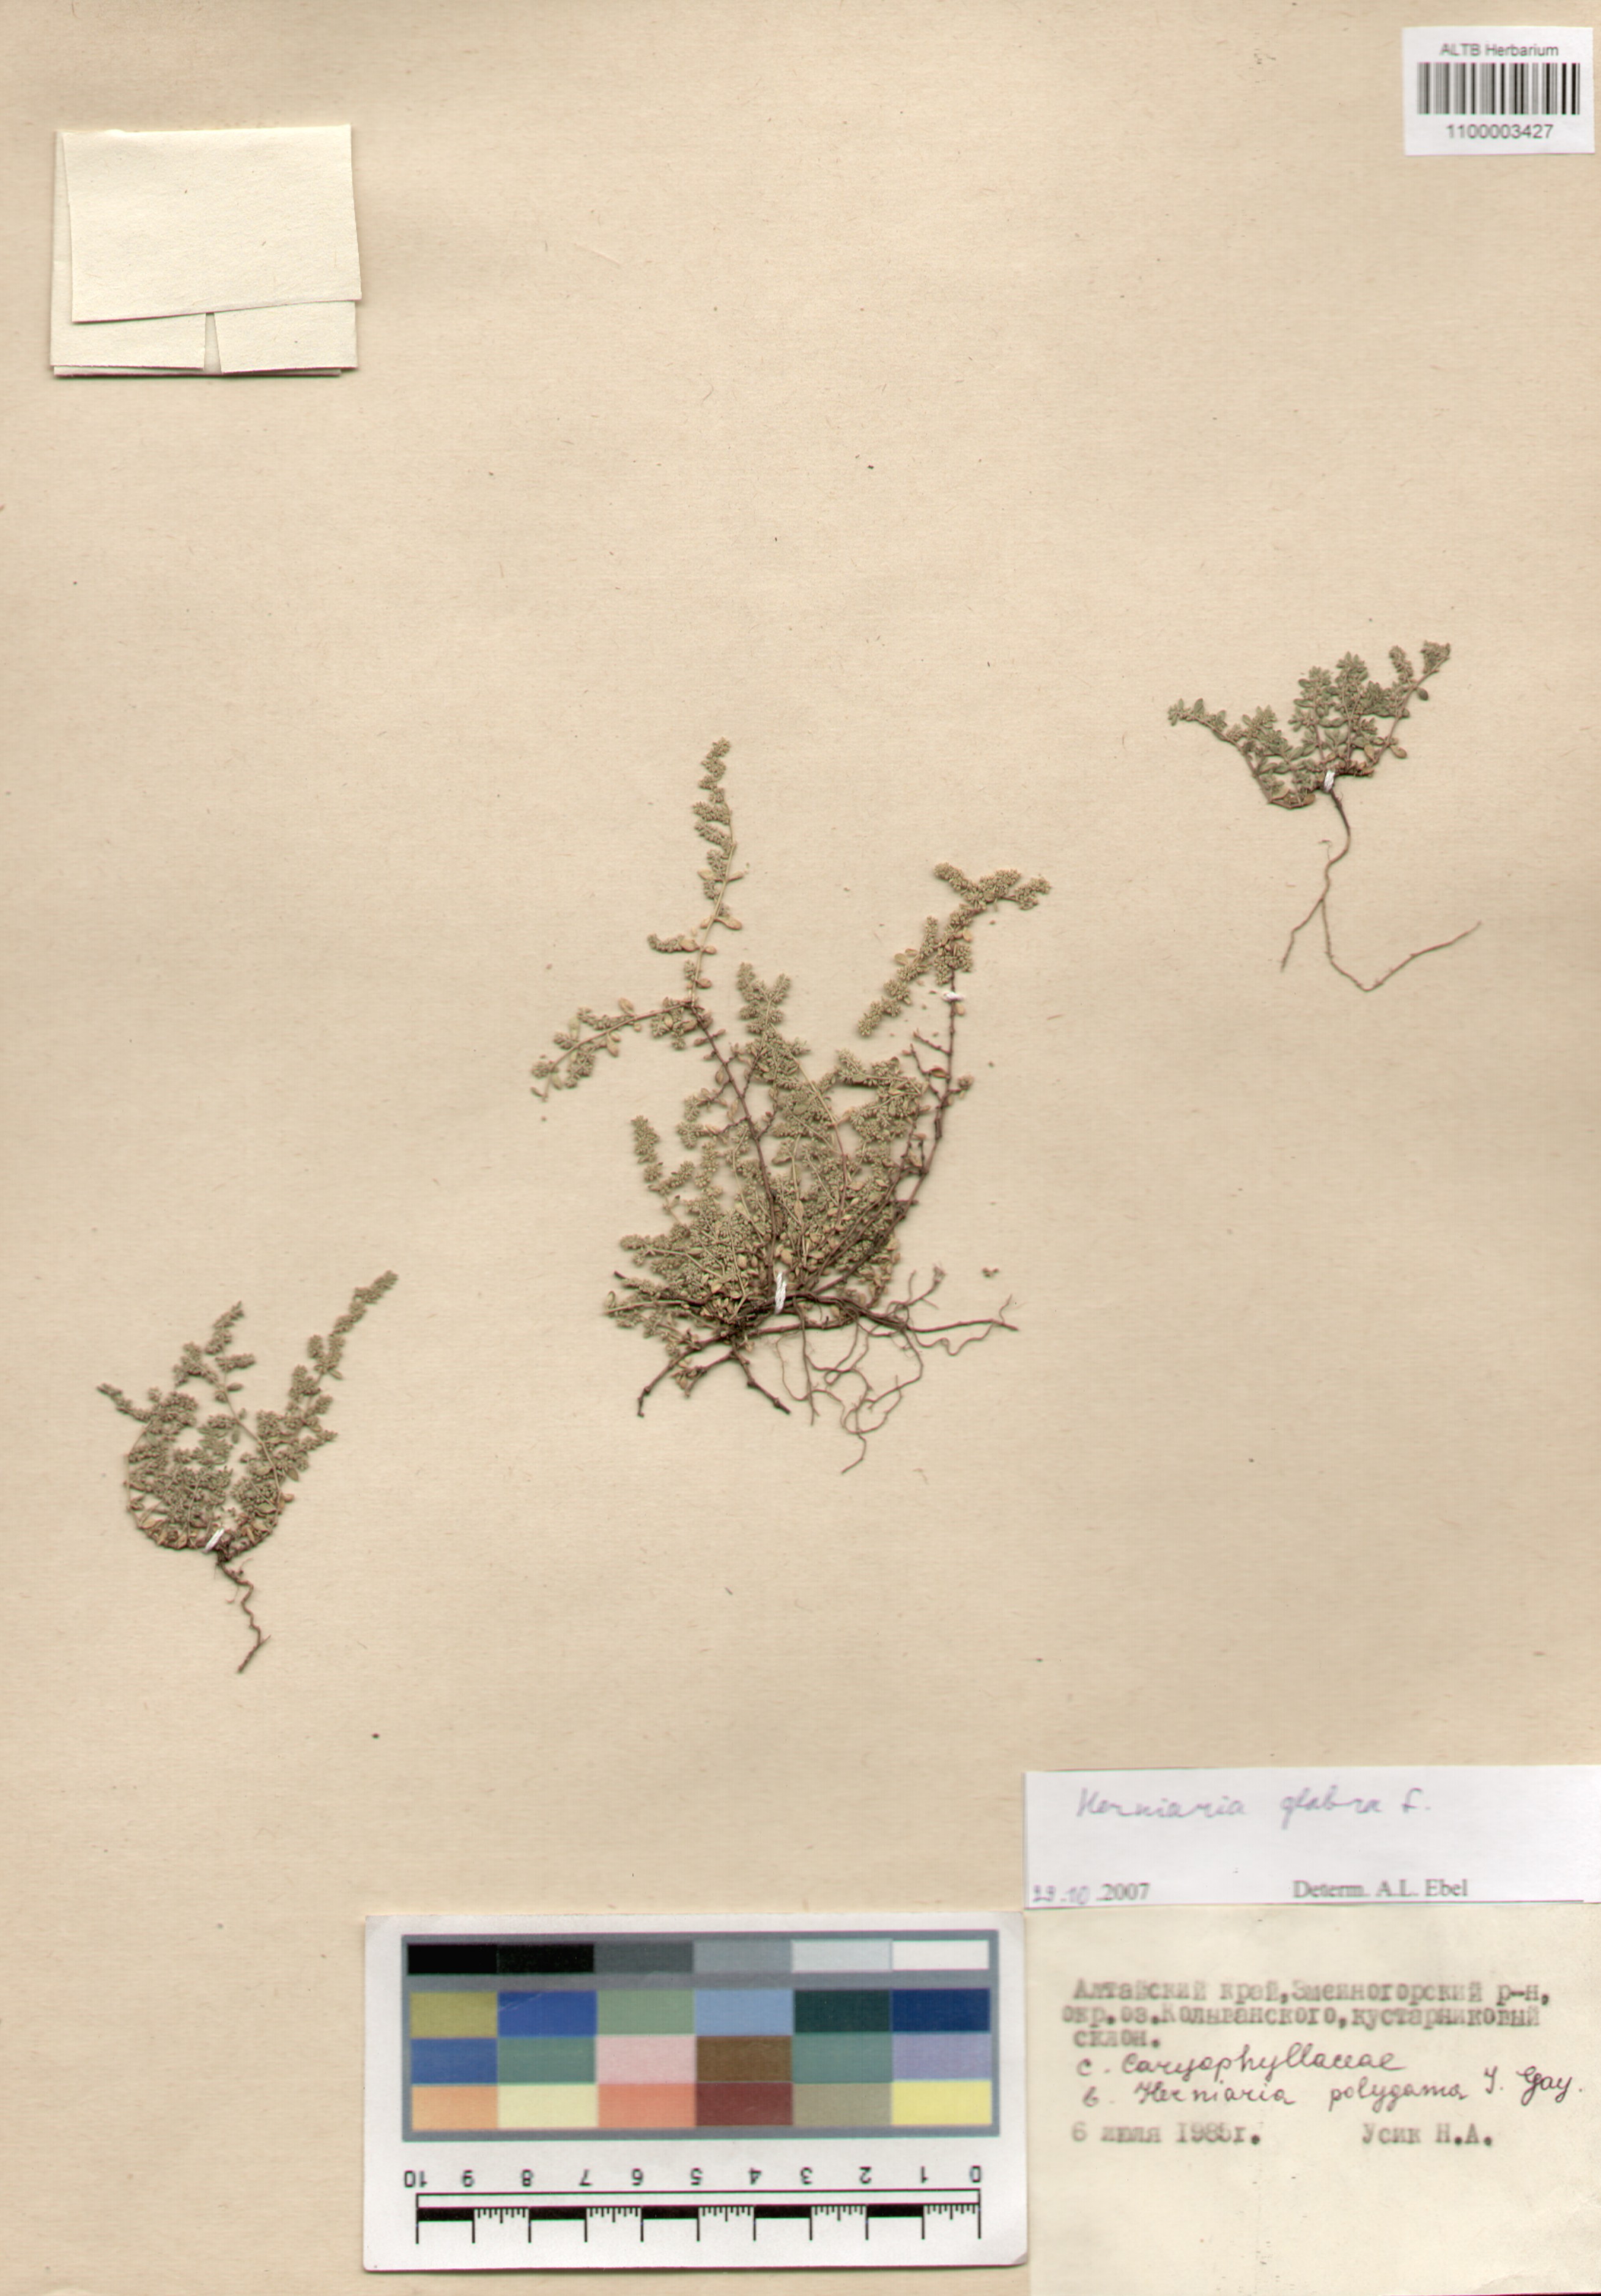 Caryophyllaceae,Herniaria glabra L.